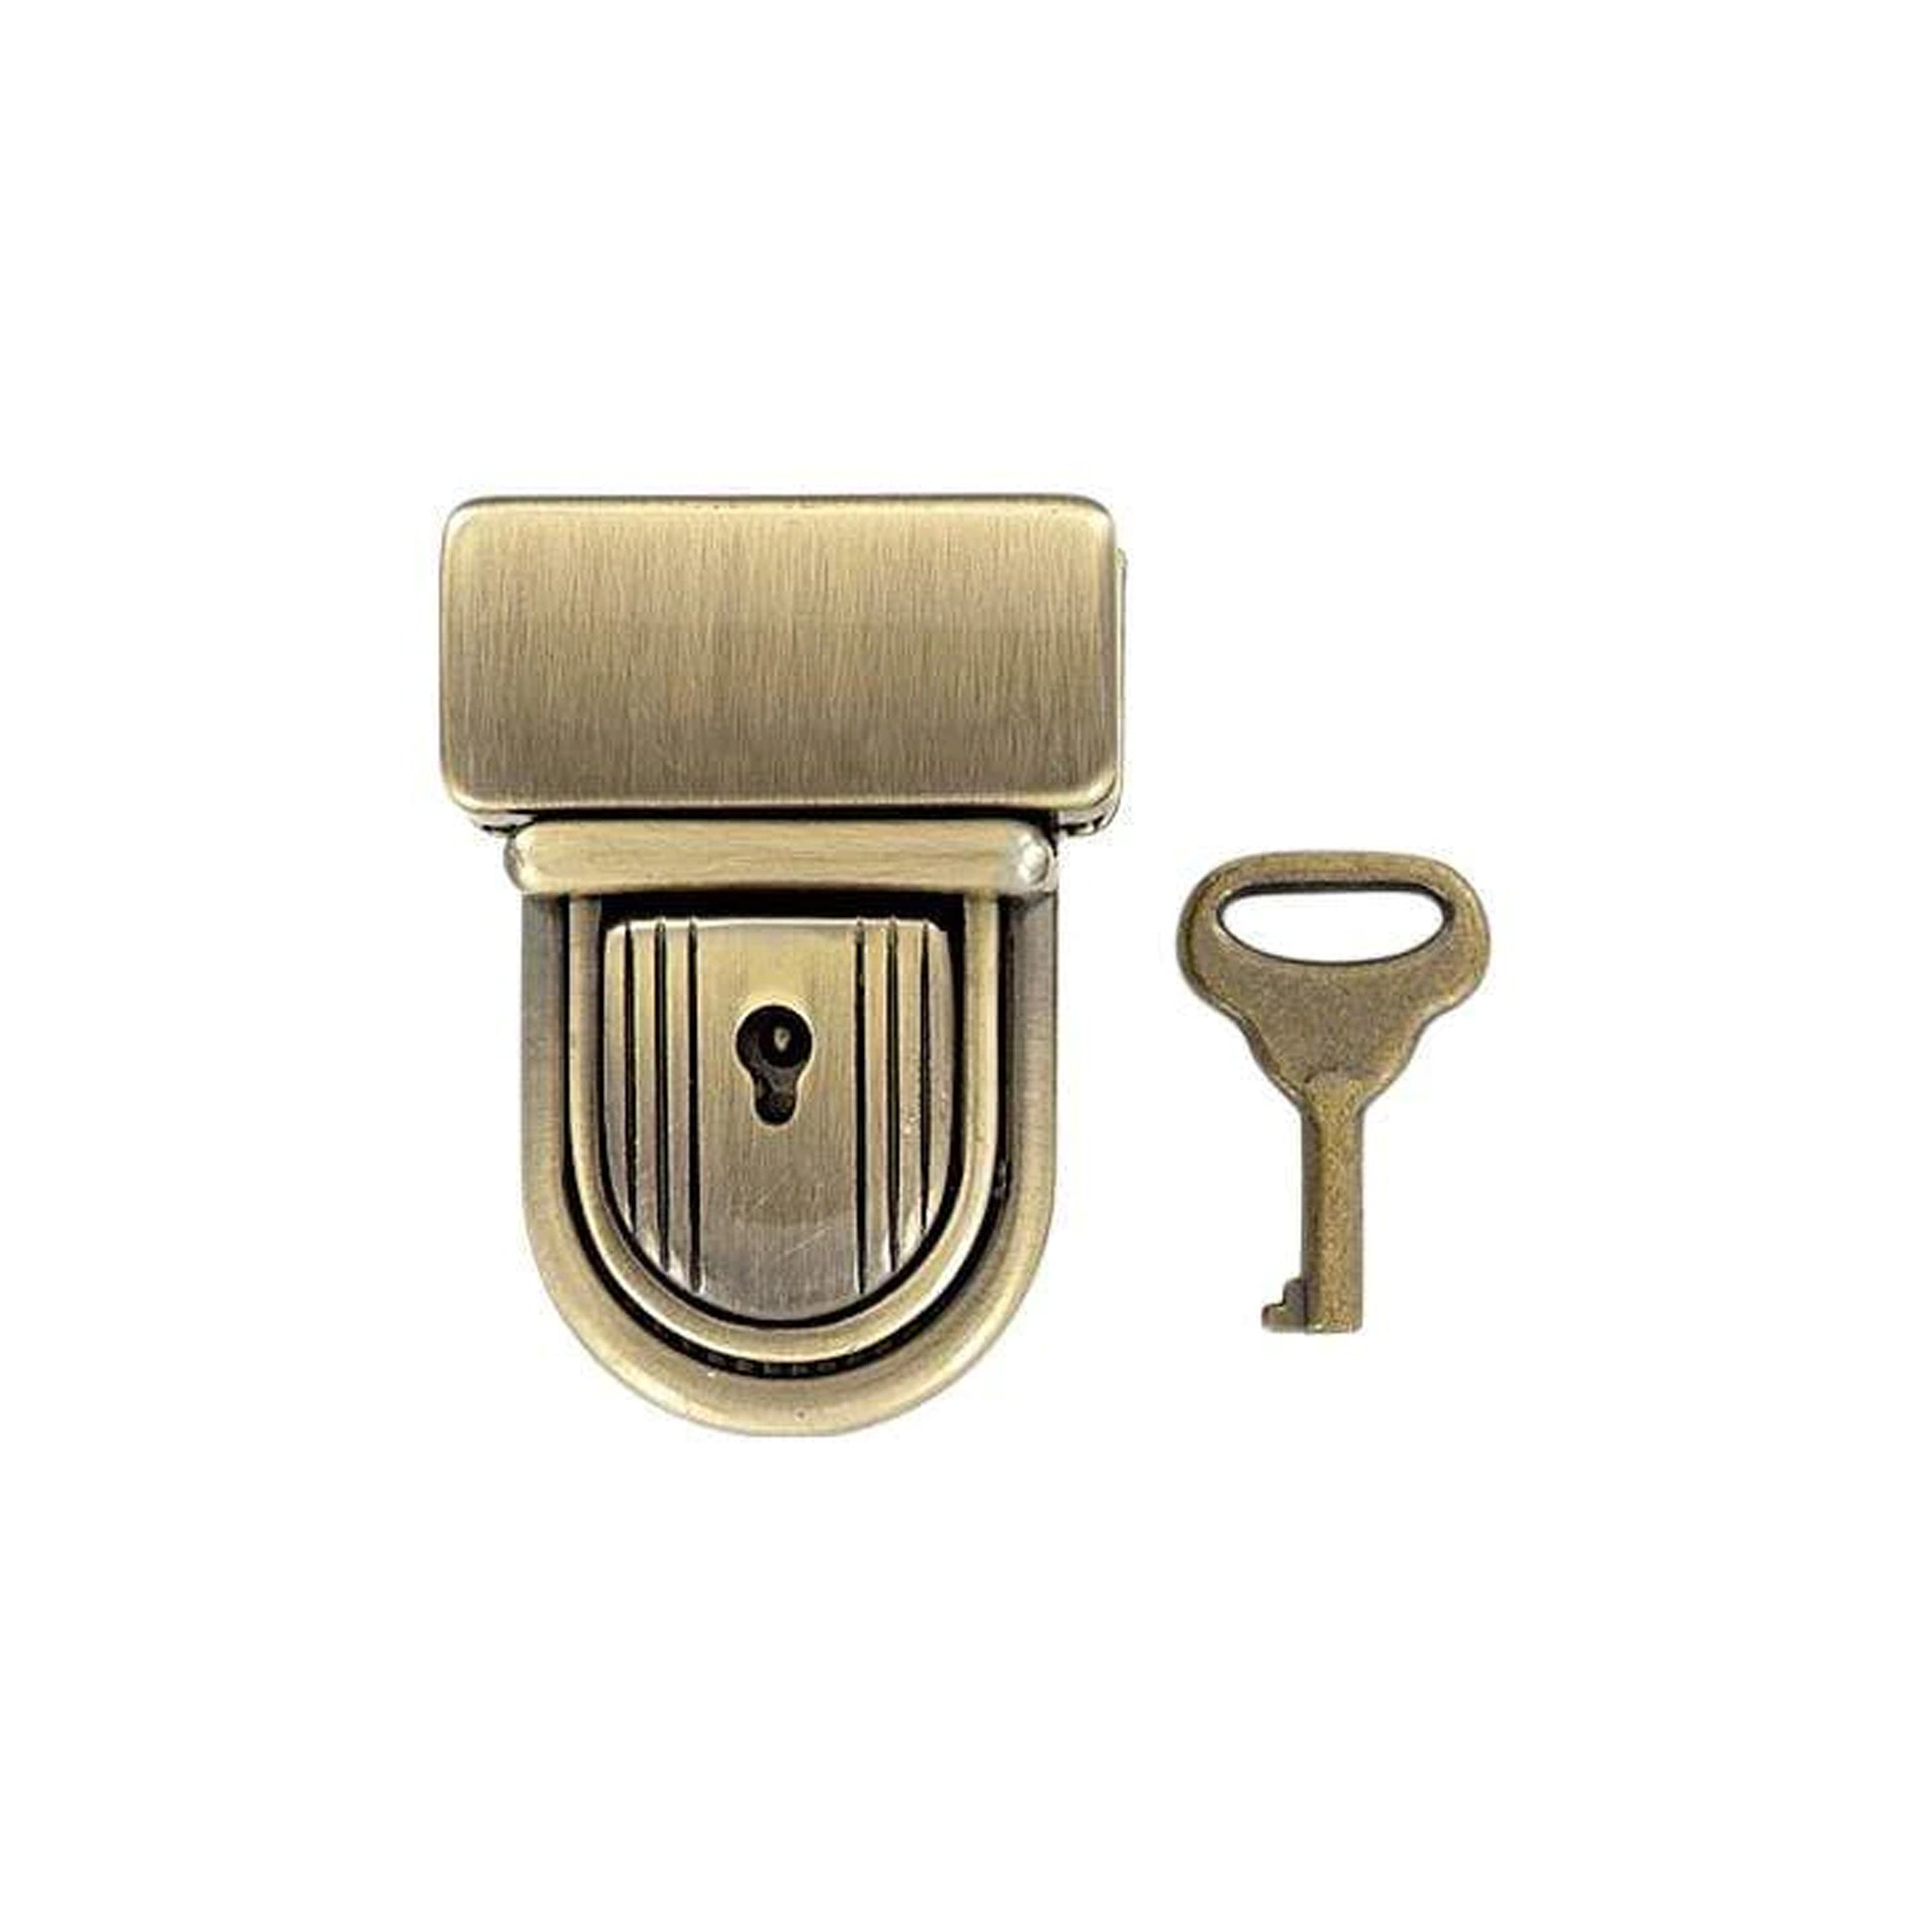 Ohio Travel Bag-Locks & Closures-3 1/2 Brushed Antique Brass, Trunk Lock,  Steel, #G-1-ANTB-$8.00